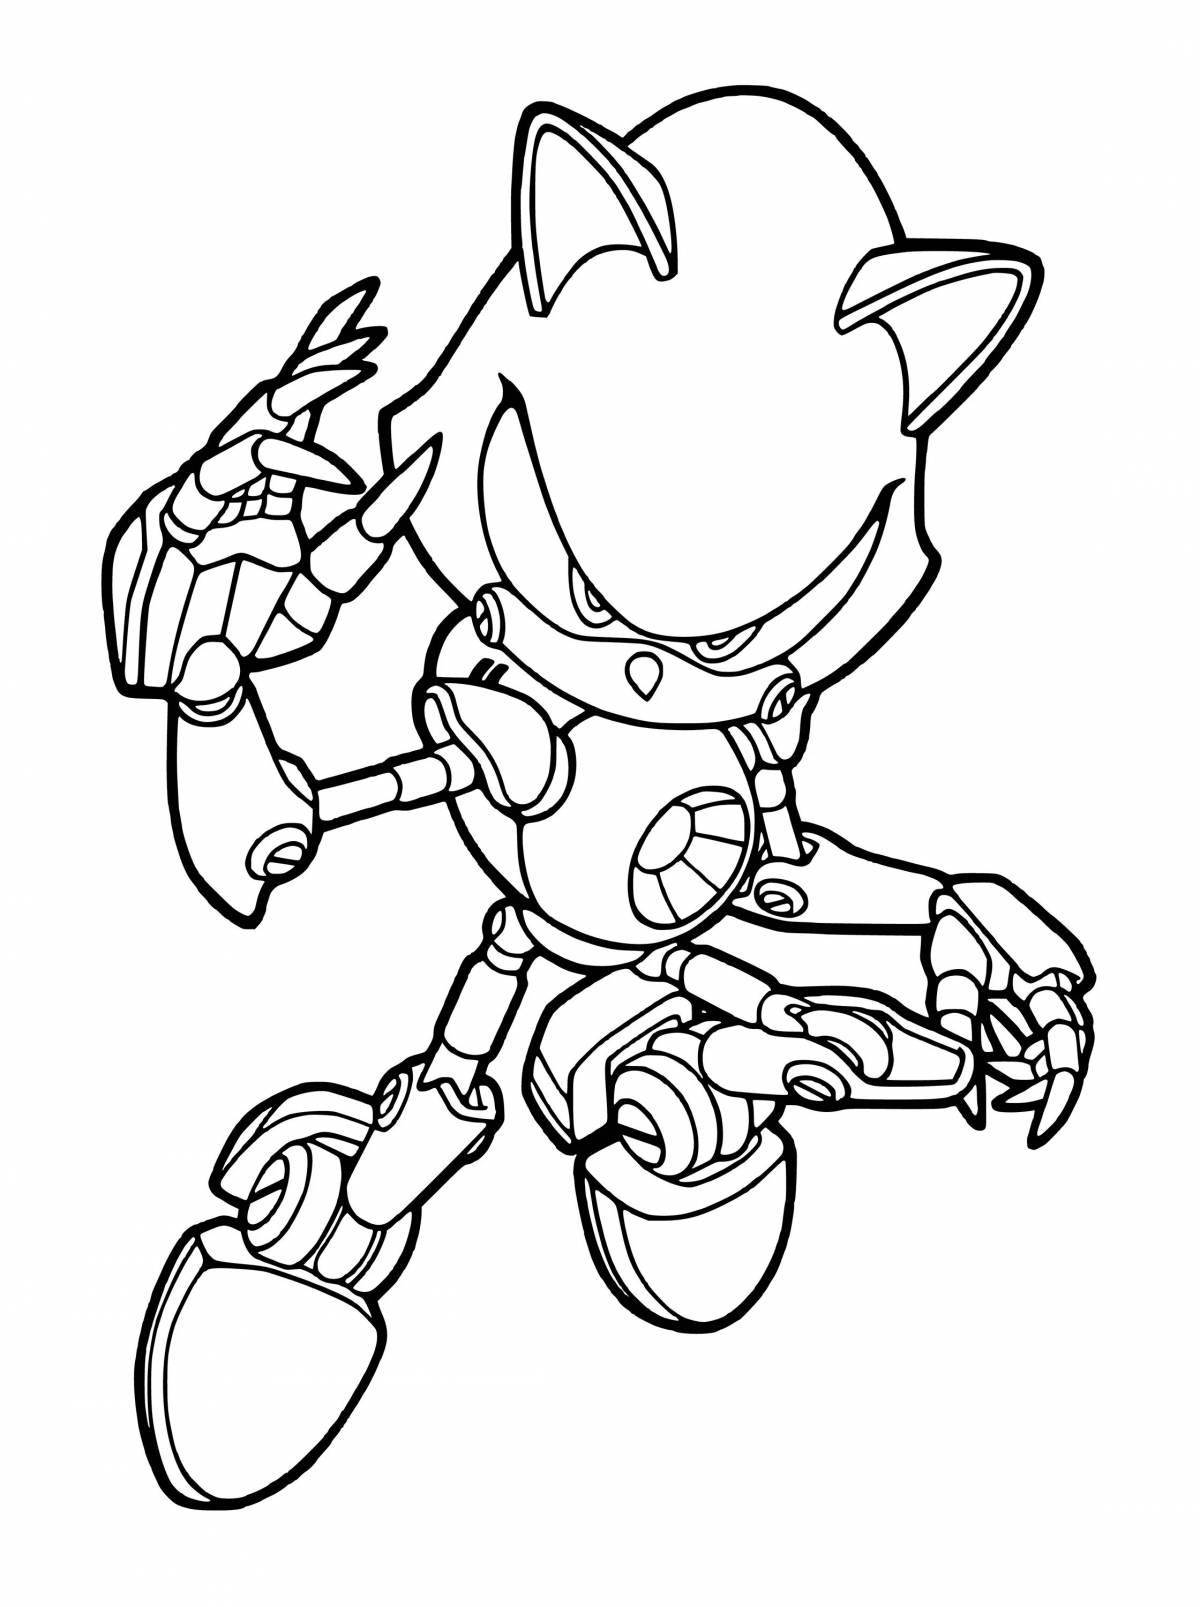 Sonic iron shining coloring book